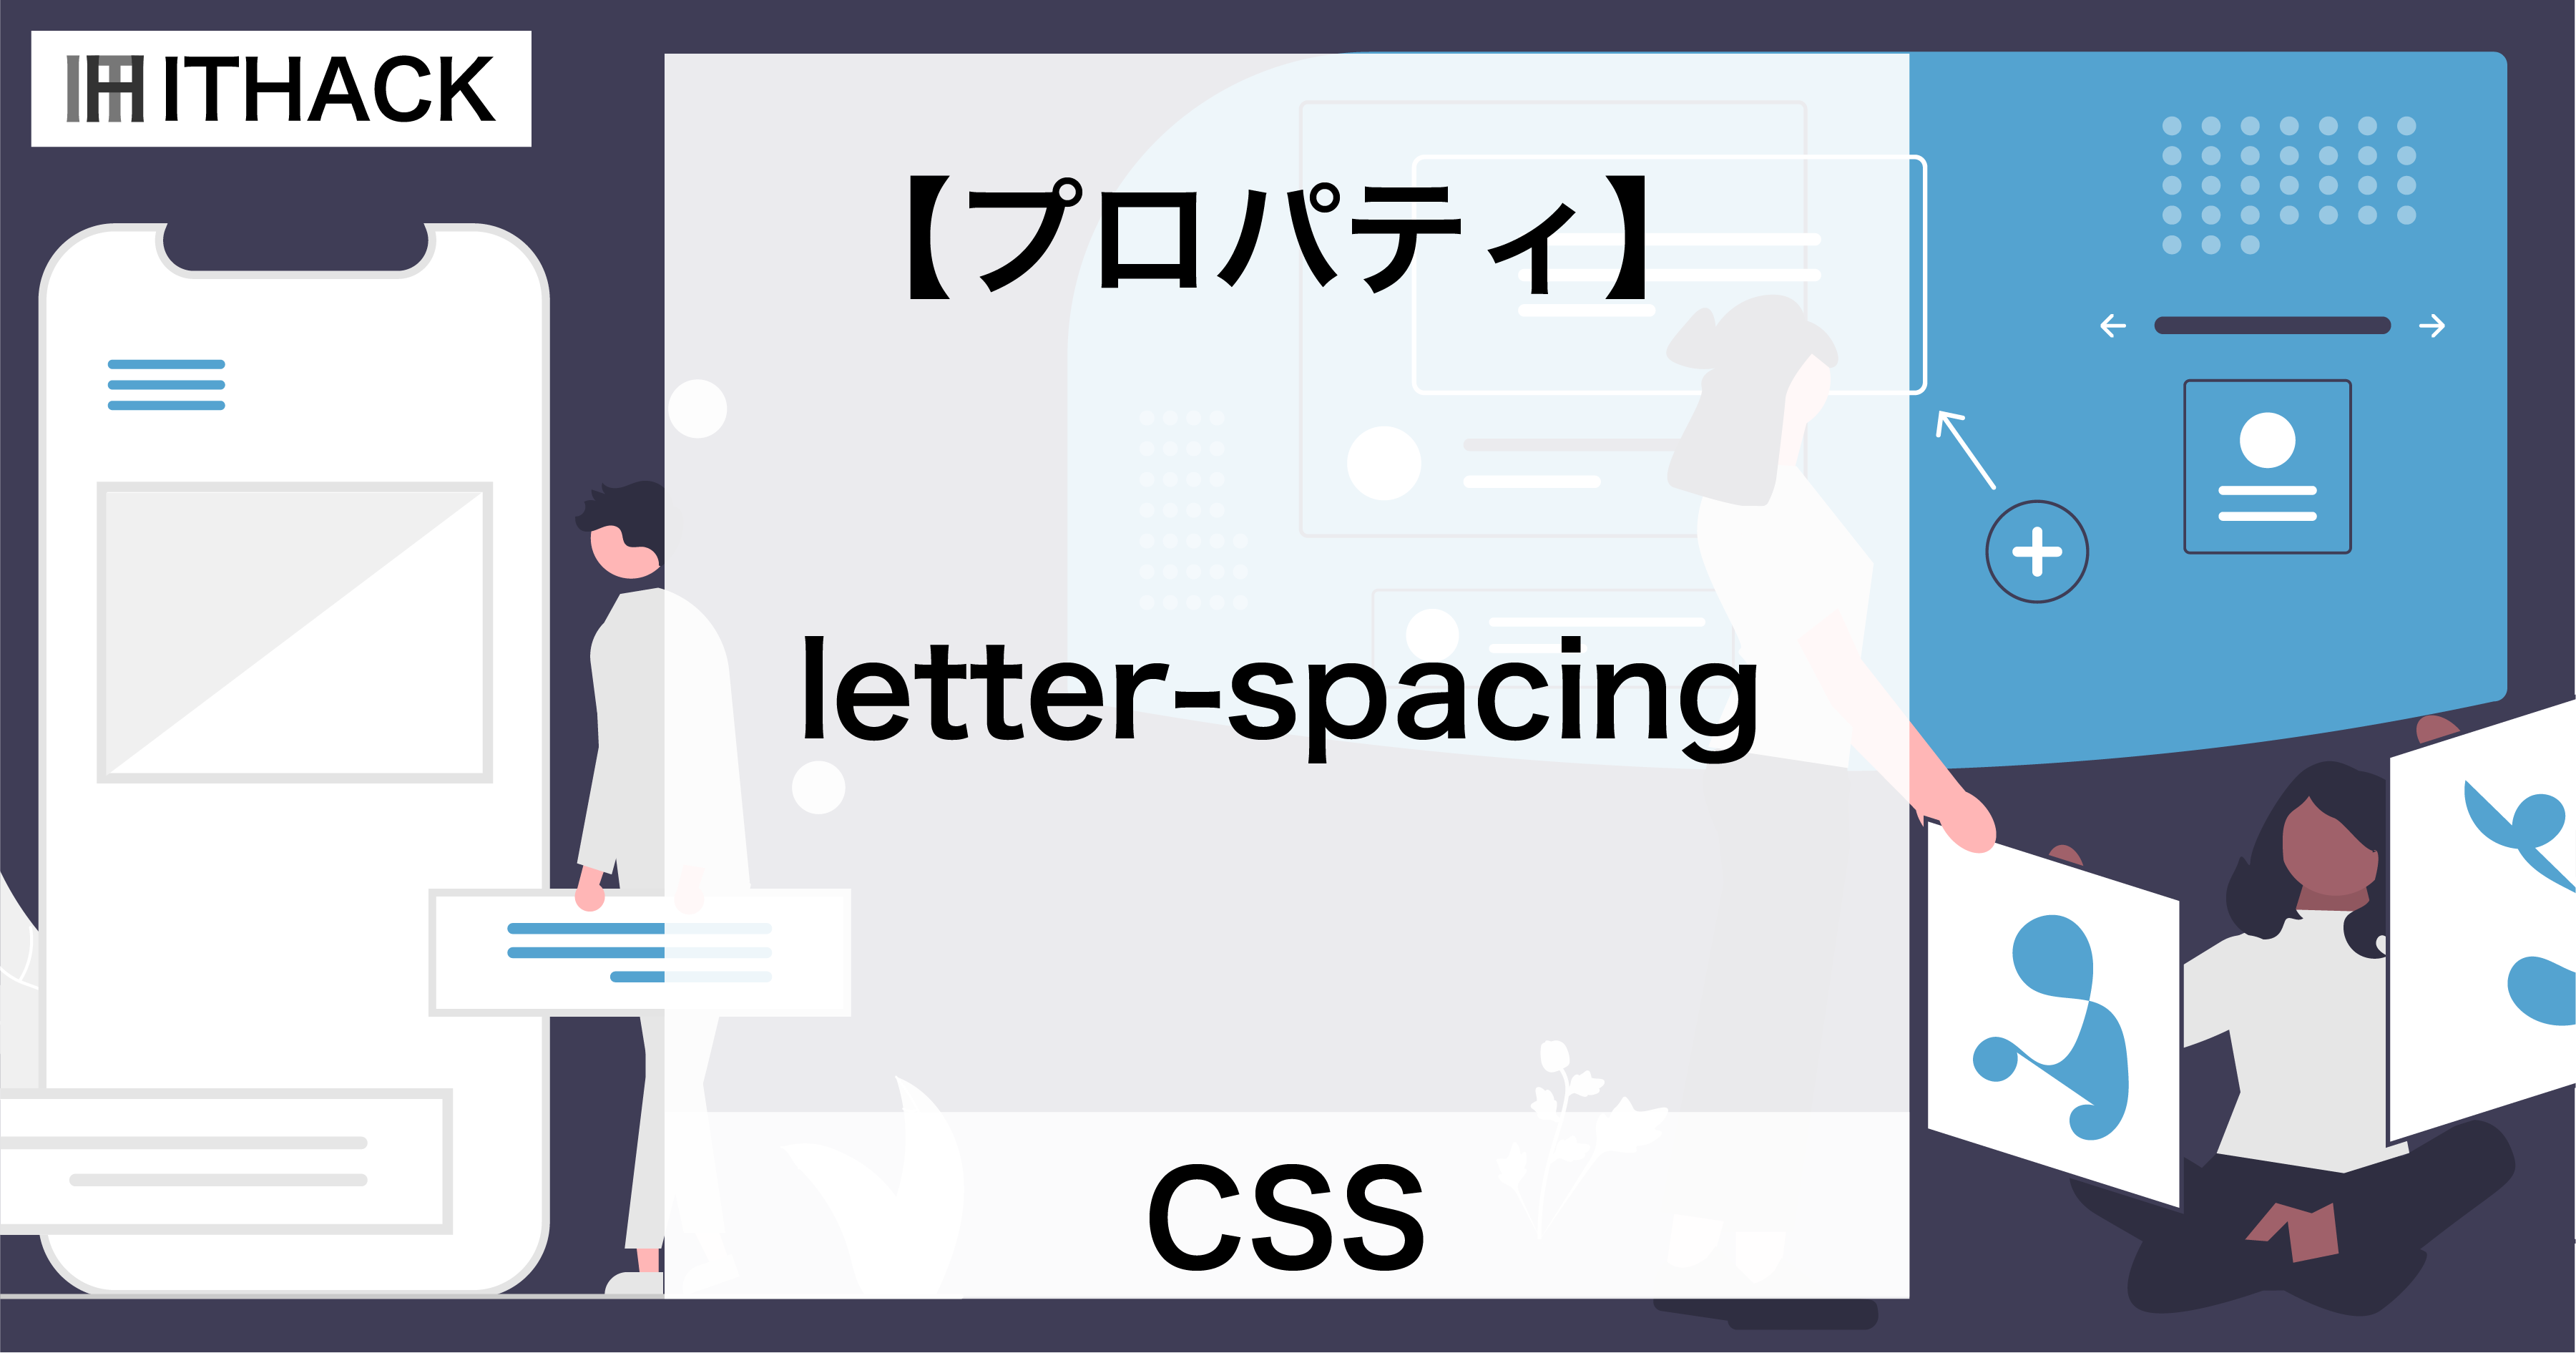 【CSS】letter-spacing - テキストの字間